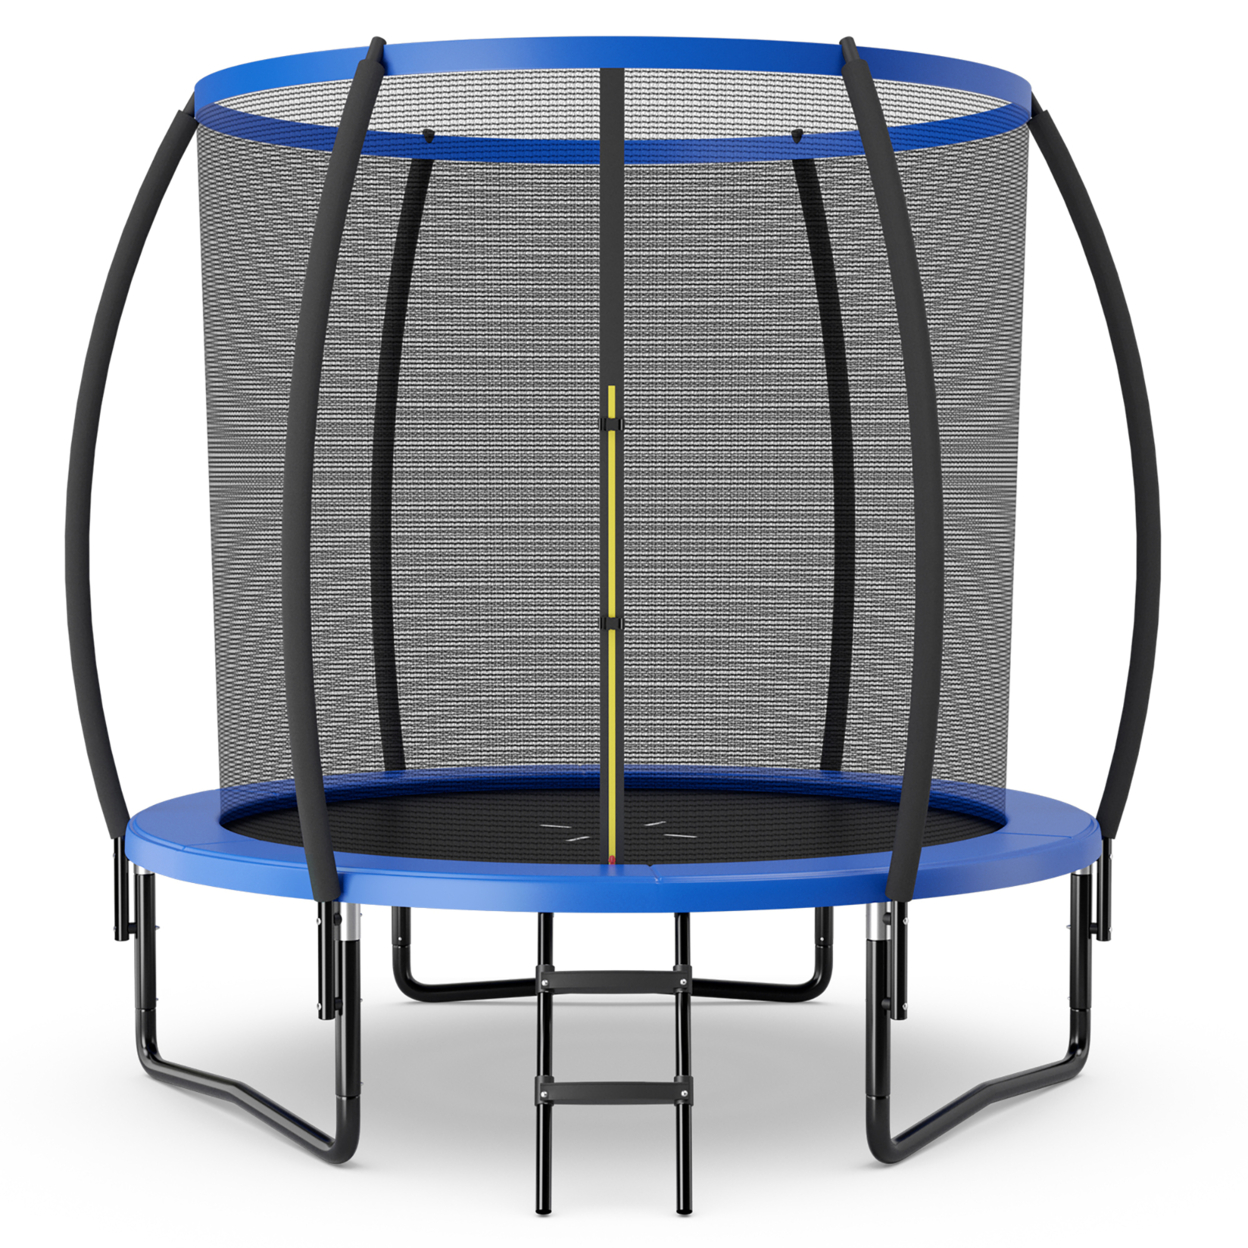 8FT Recreational Trampoline W/ Ladder Enclosure Net Safety Pad Outdoor - Black